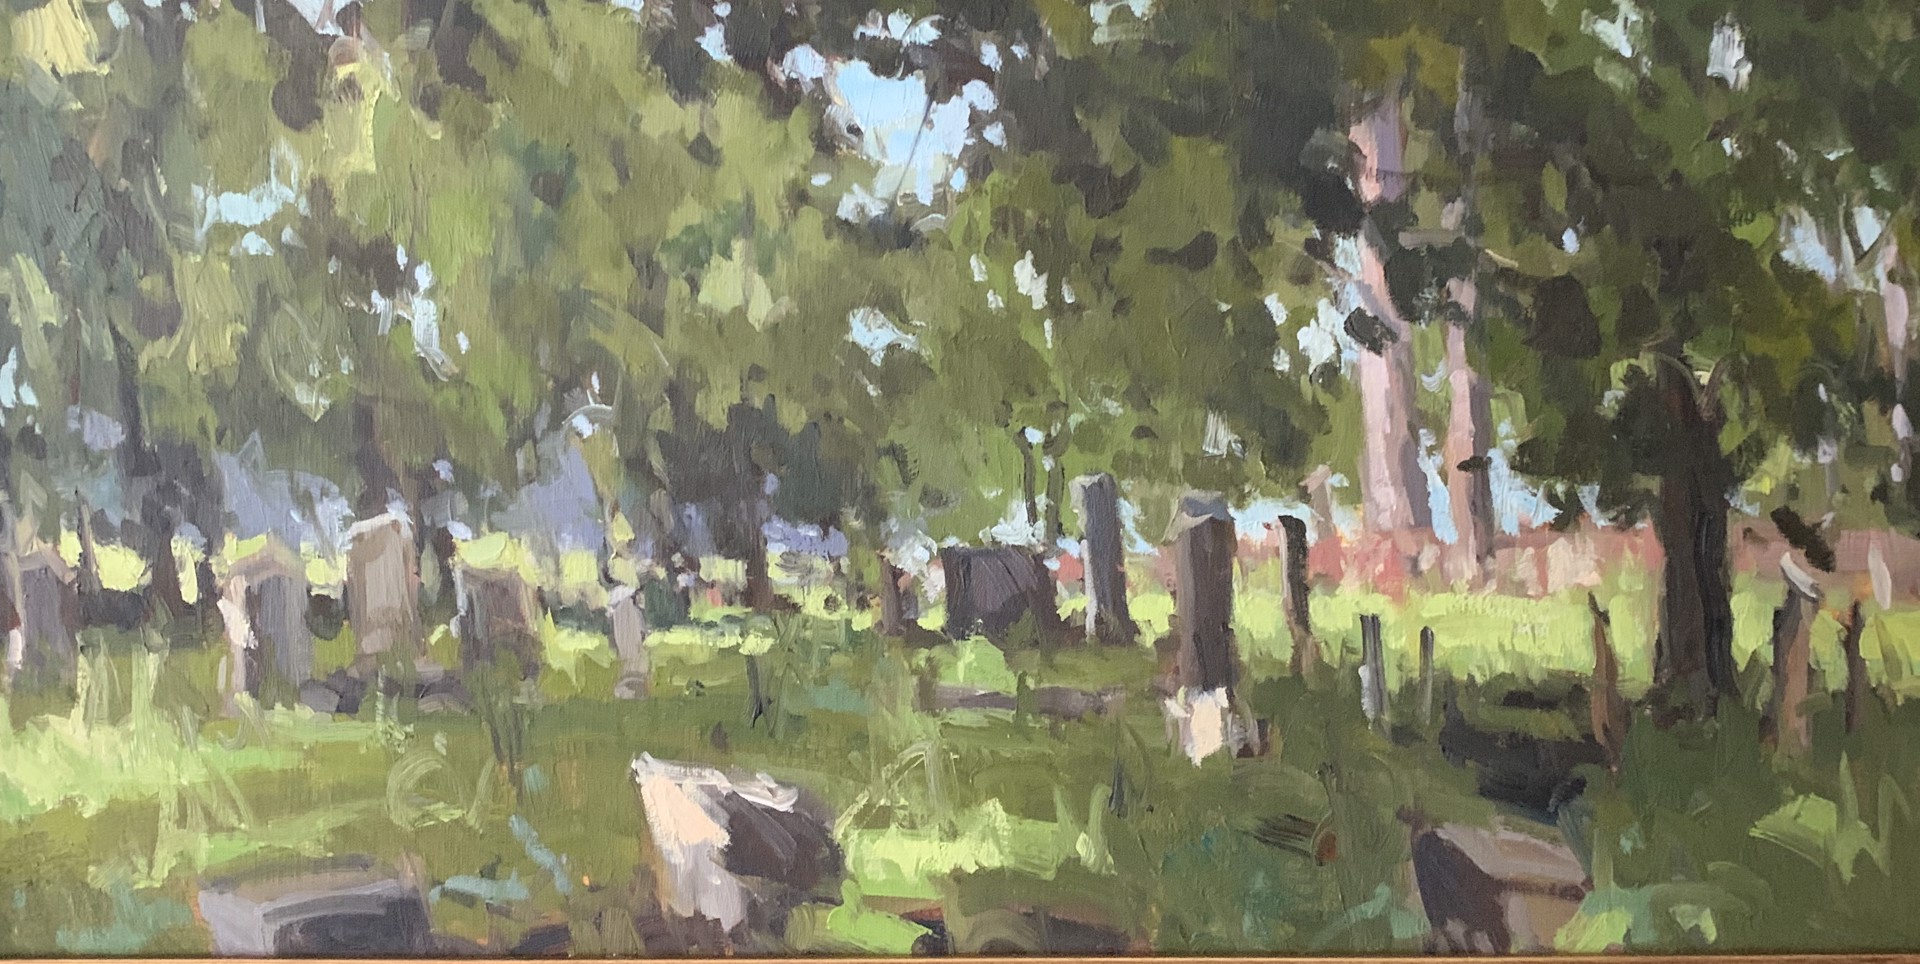 Sardis Cemetery by R. David Boyd, Jr